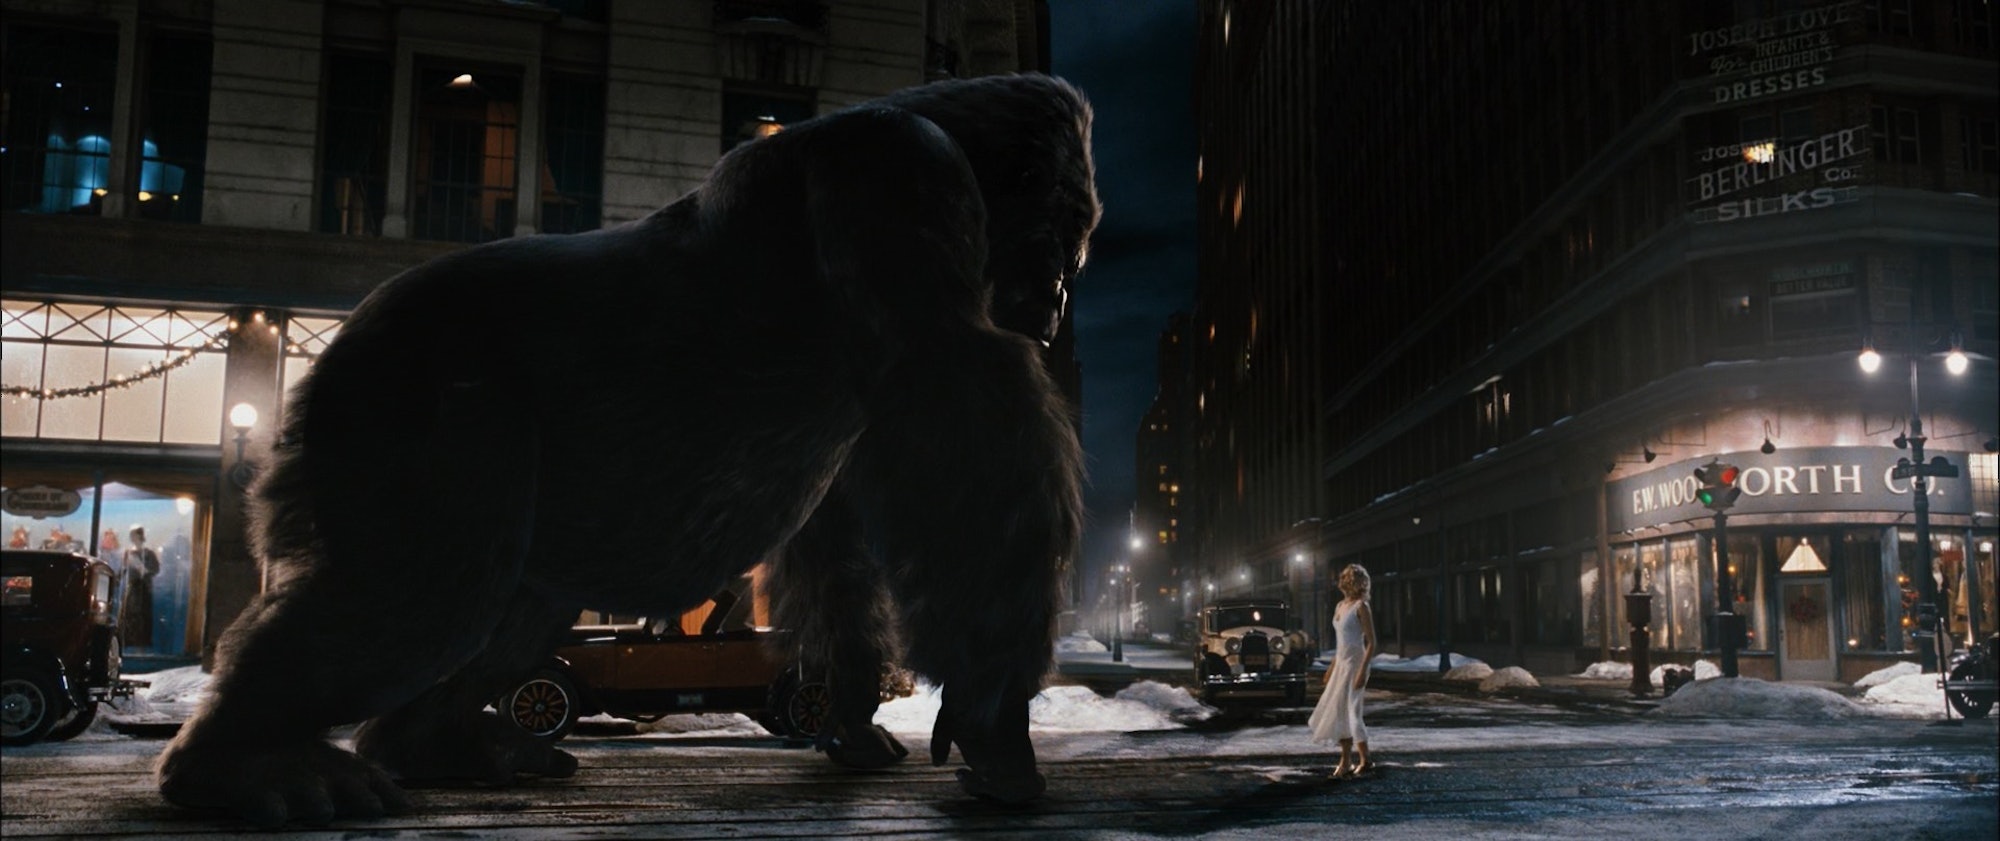 New King Kong Will Be Taller But Not As Tall As Godzilla